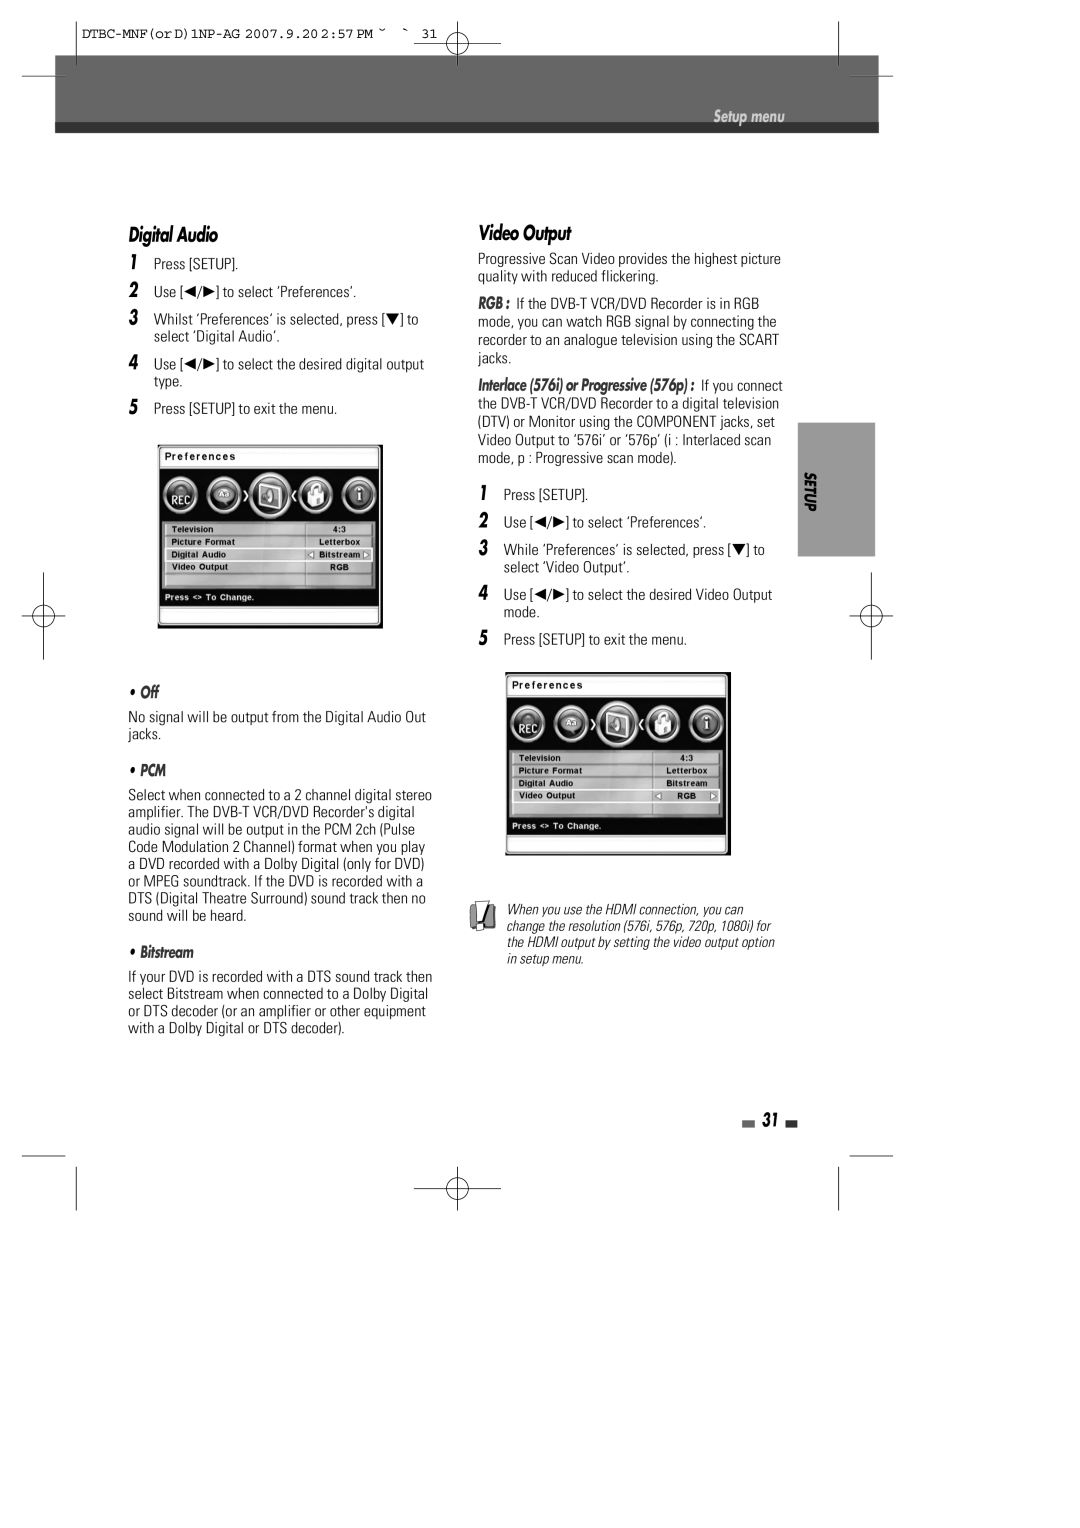 Daewoo DRVT-40, DRVT-43 instruction manual Digital Audio, Video Output, Bitstream, Setup menu 